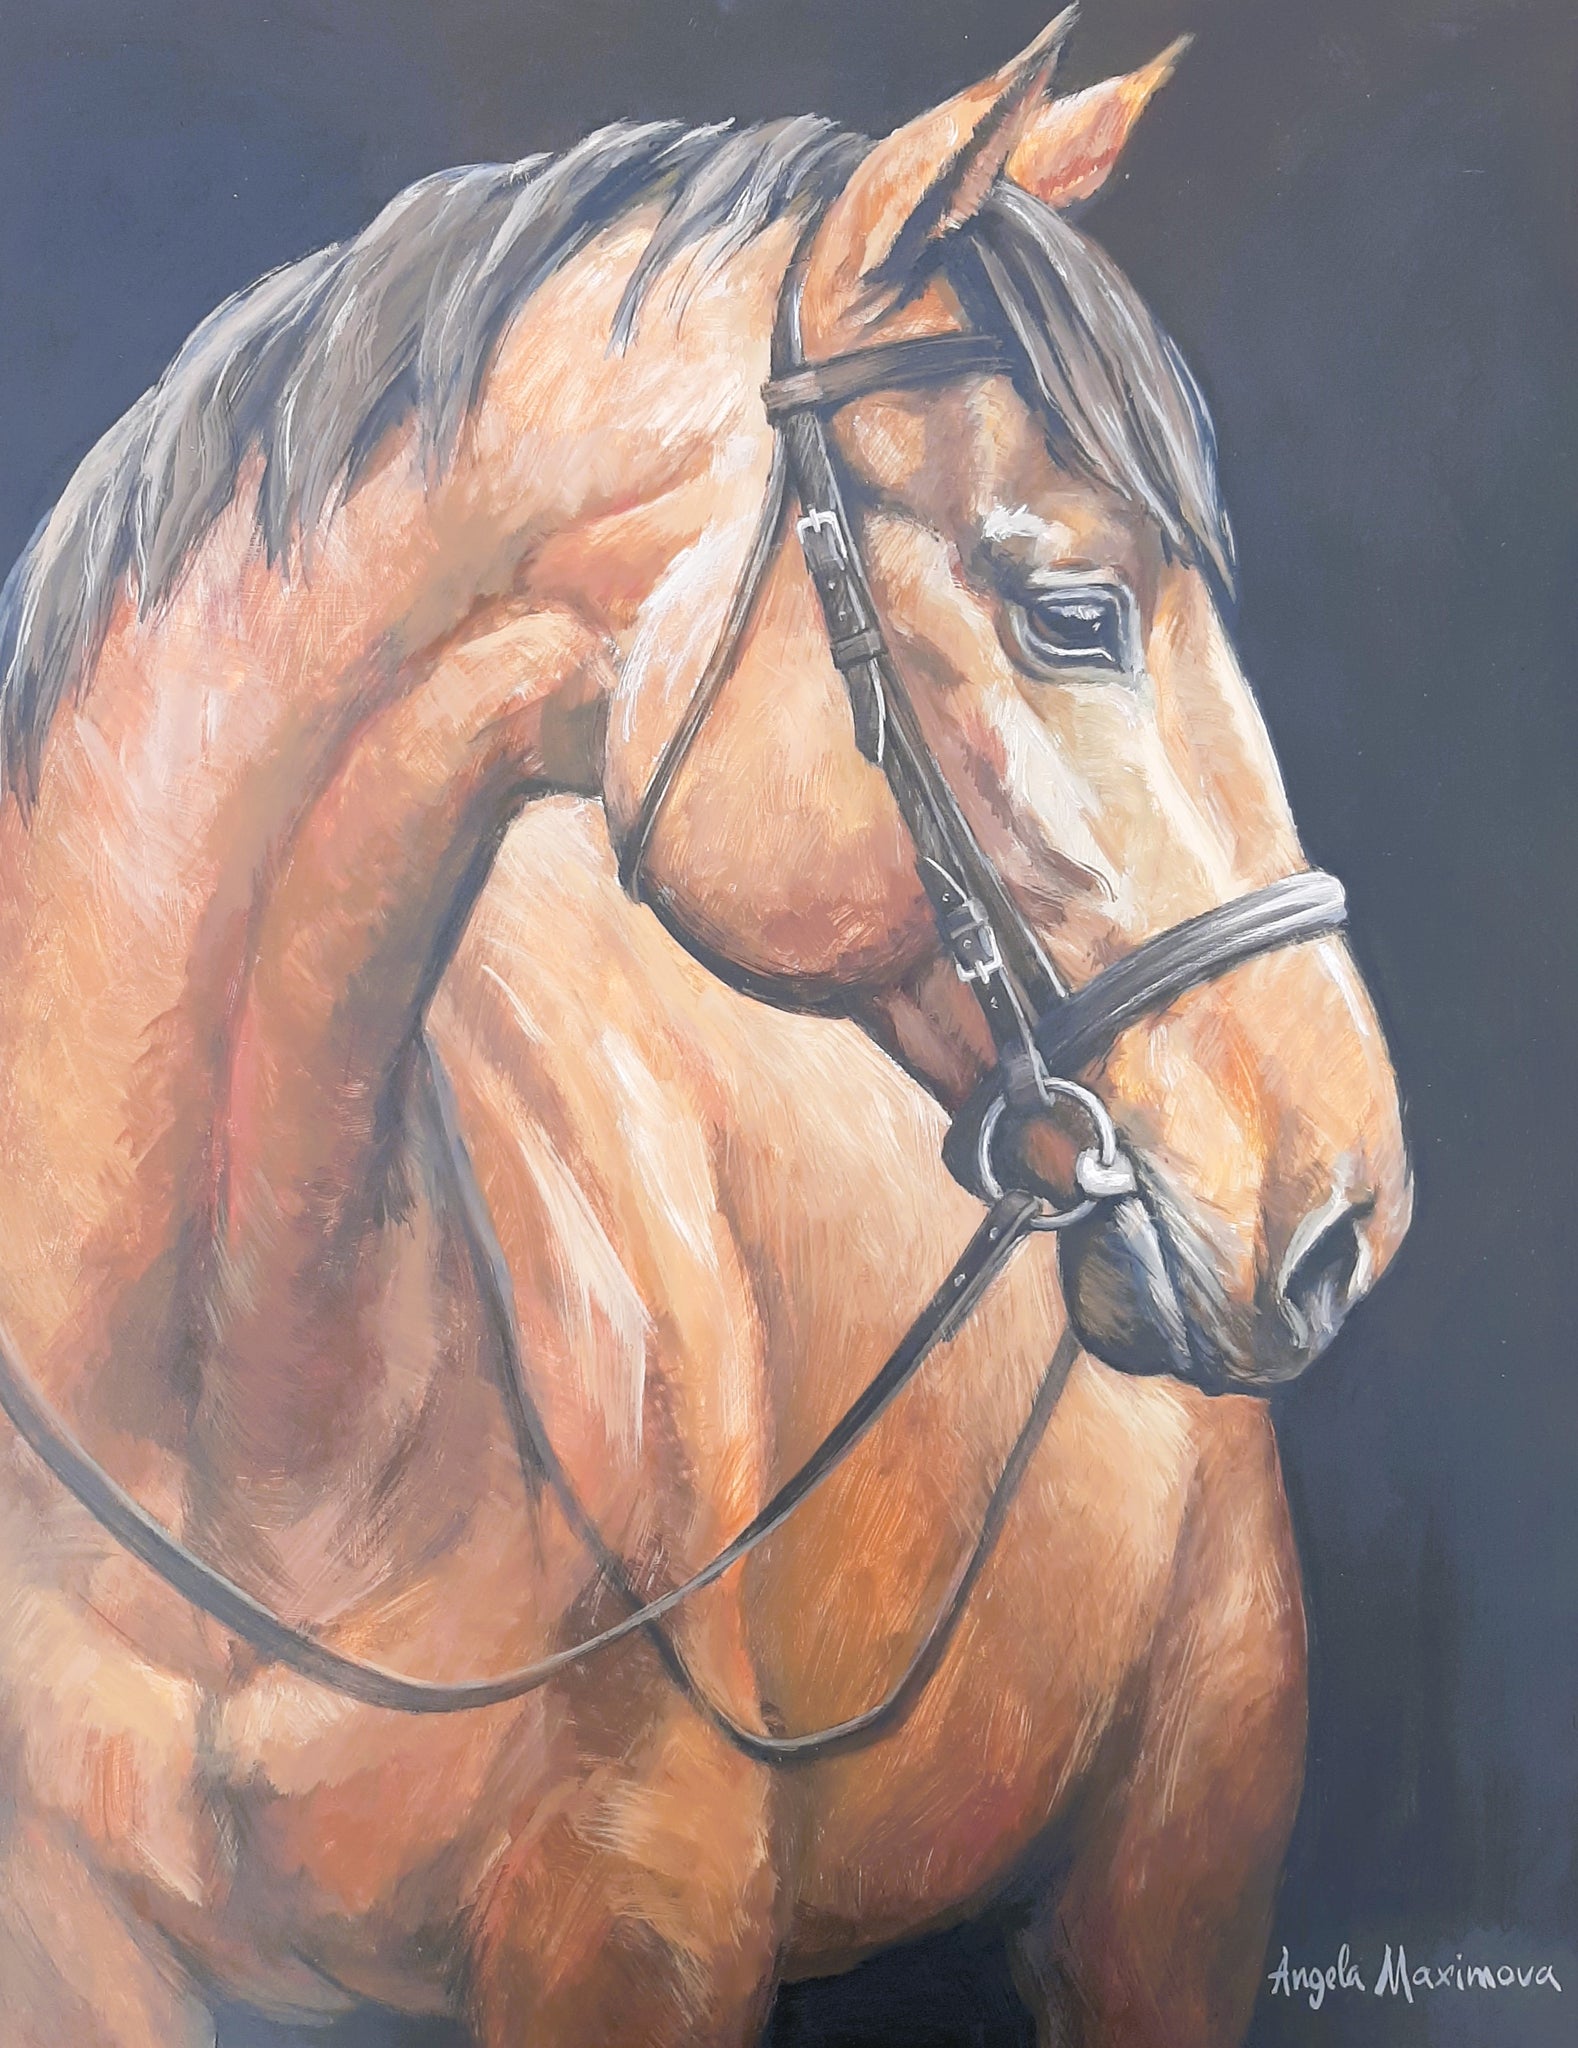 Angela Maximova "Willow" Study of a horse